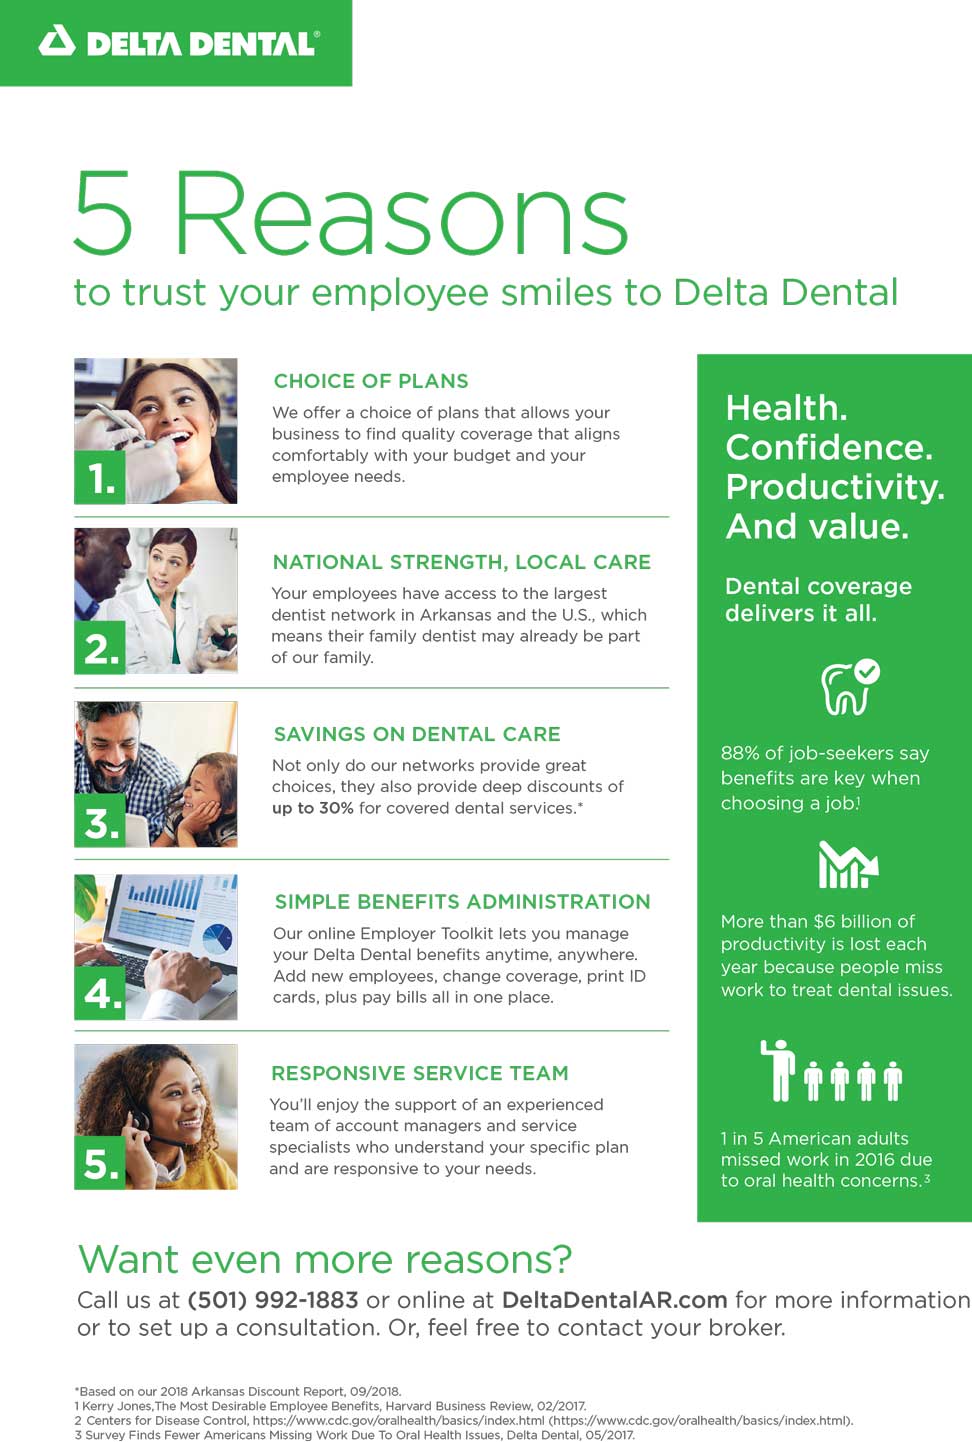 Thank you to Delta Dental for sponsoring HR2021